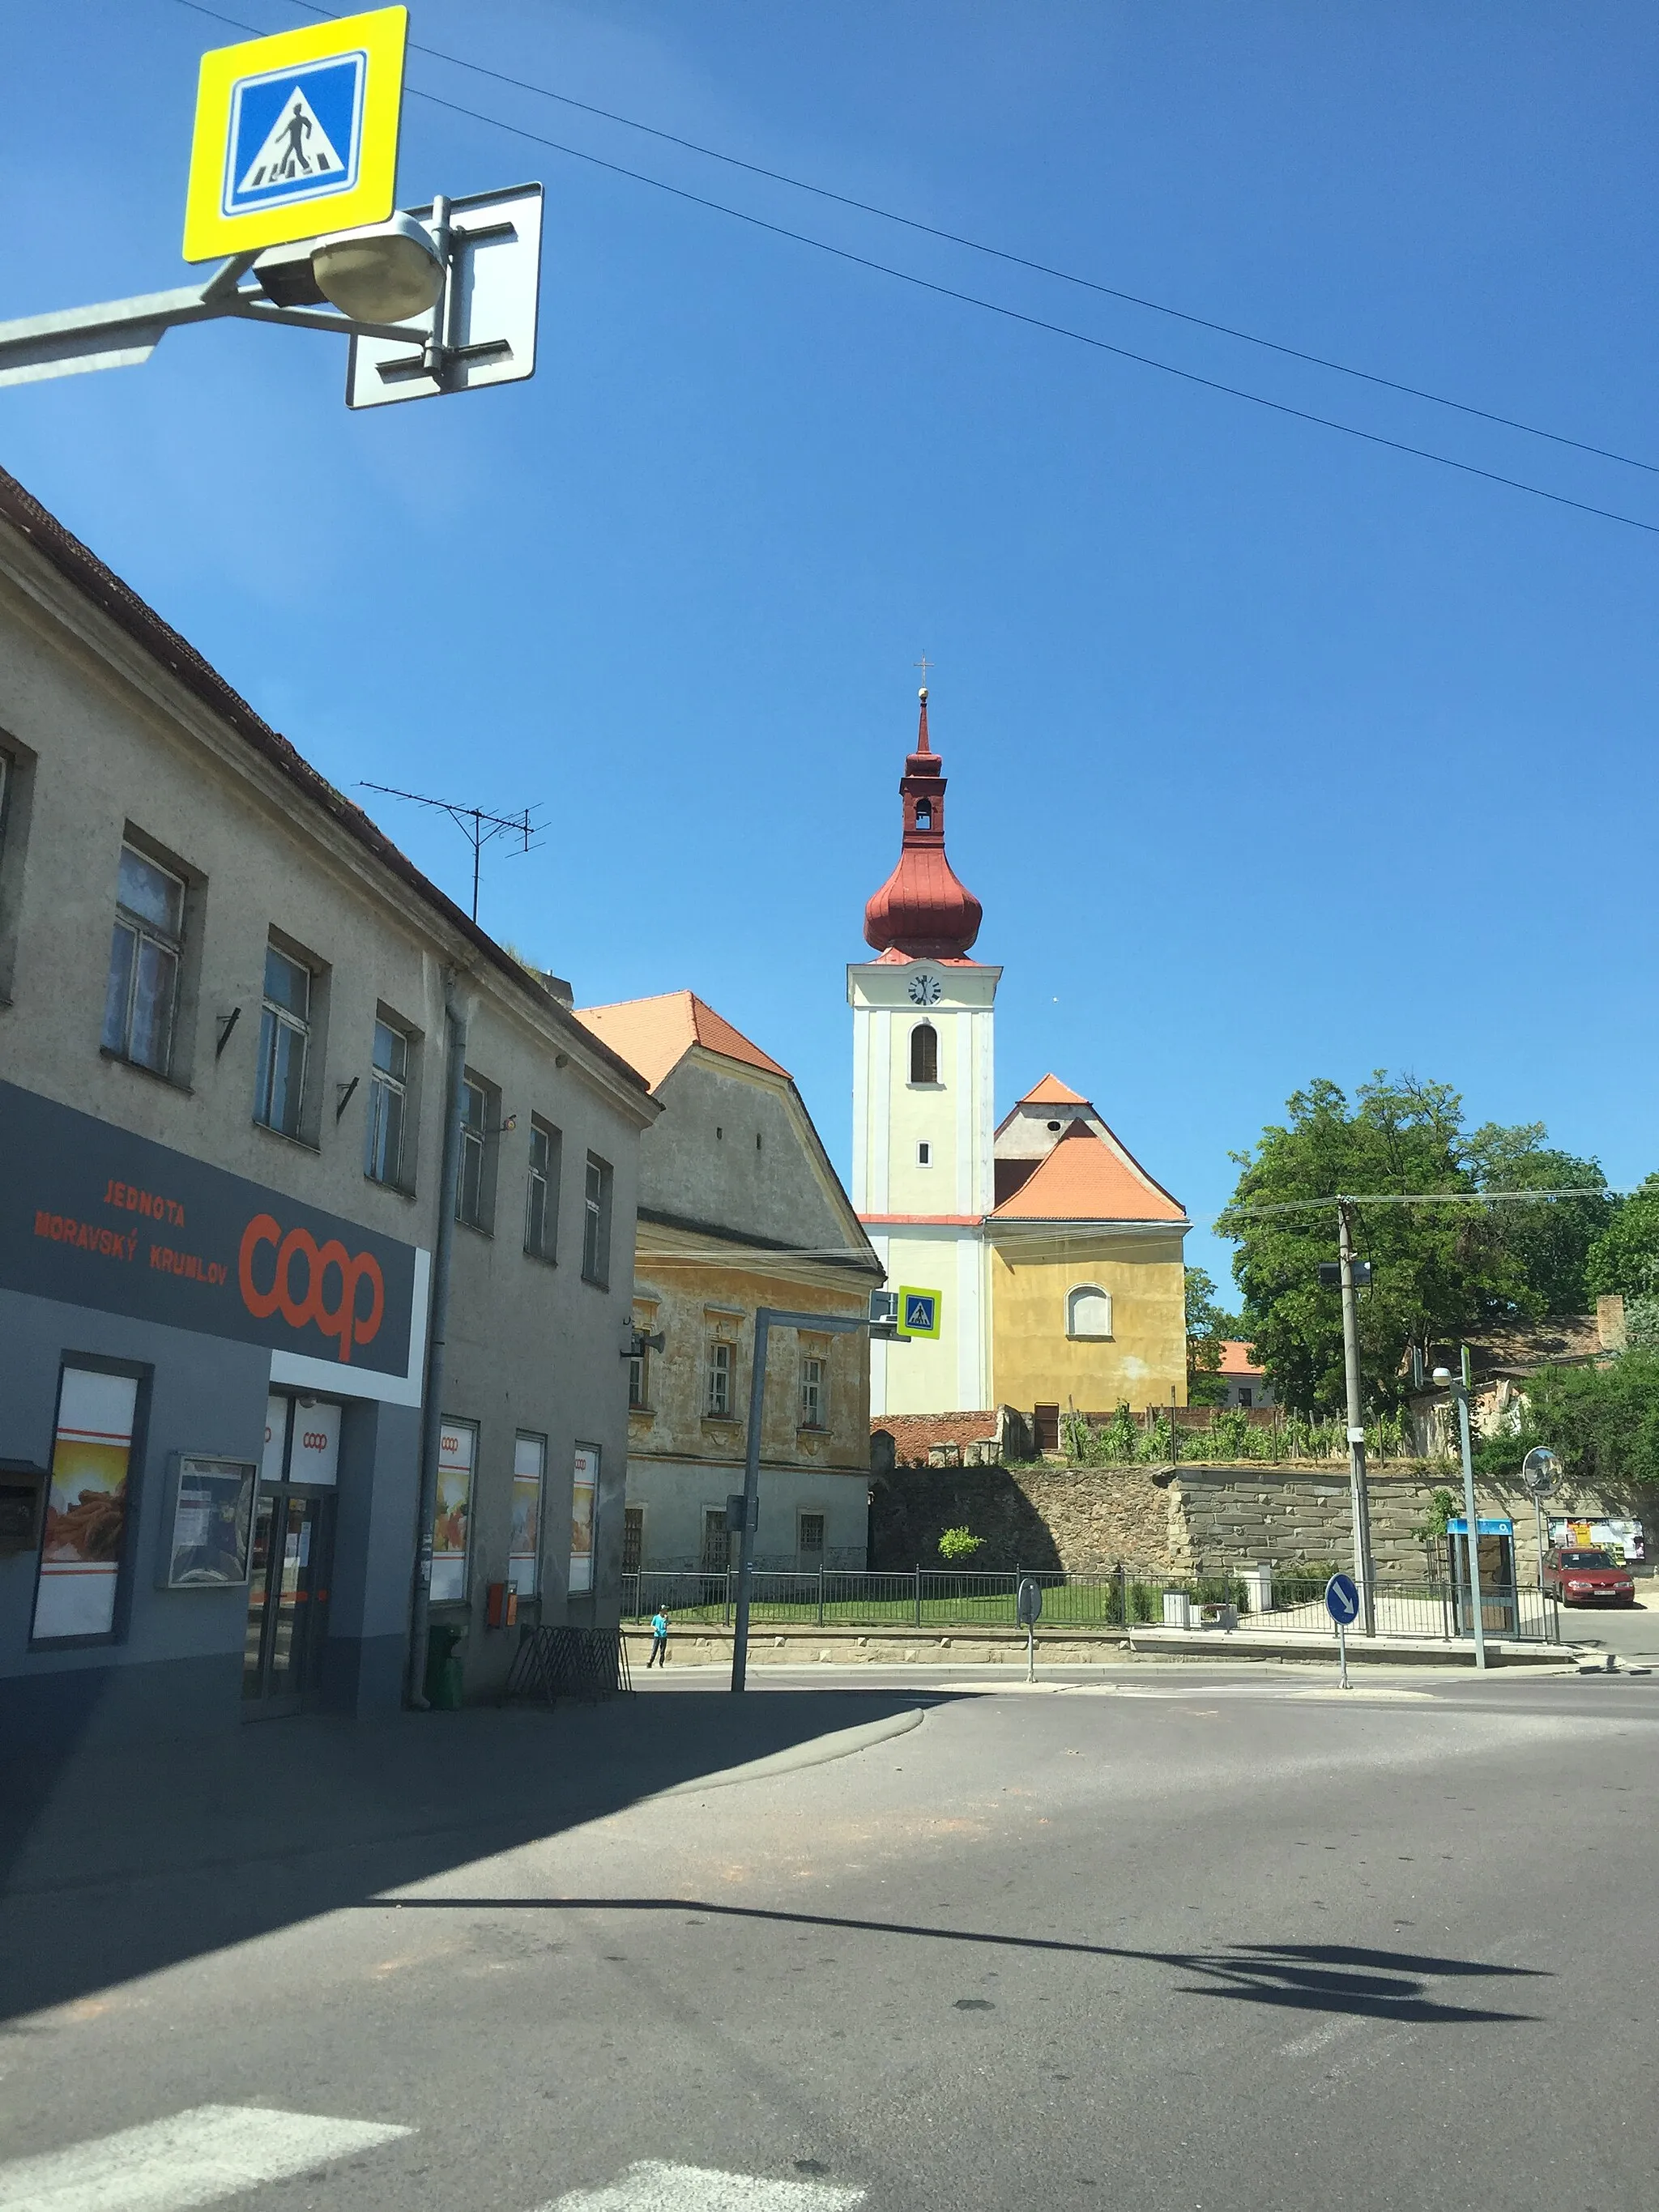 Photo showing: 671 25 Tasovice, Czech Republic